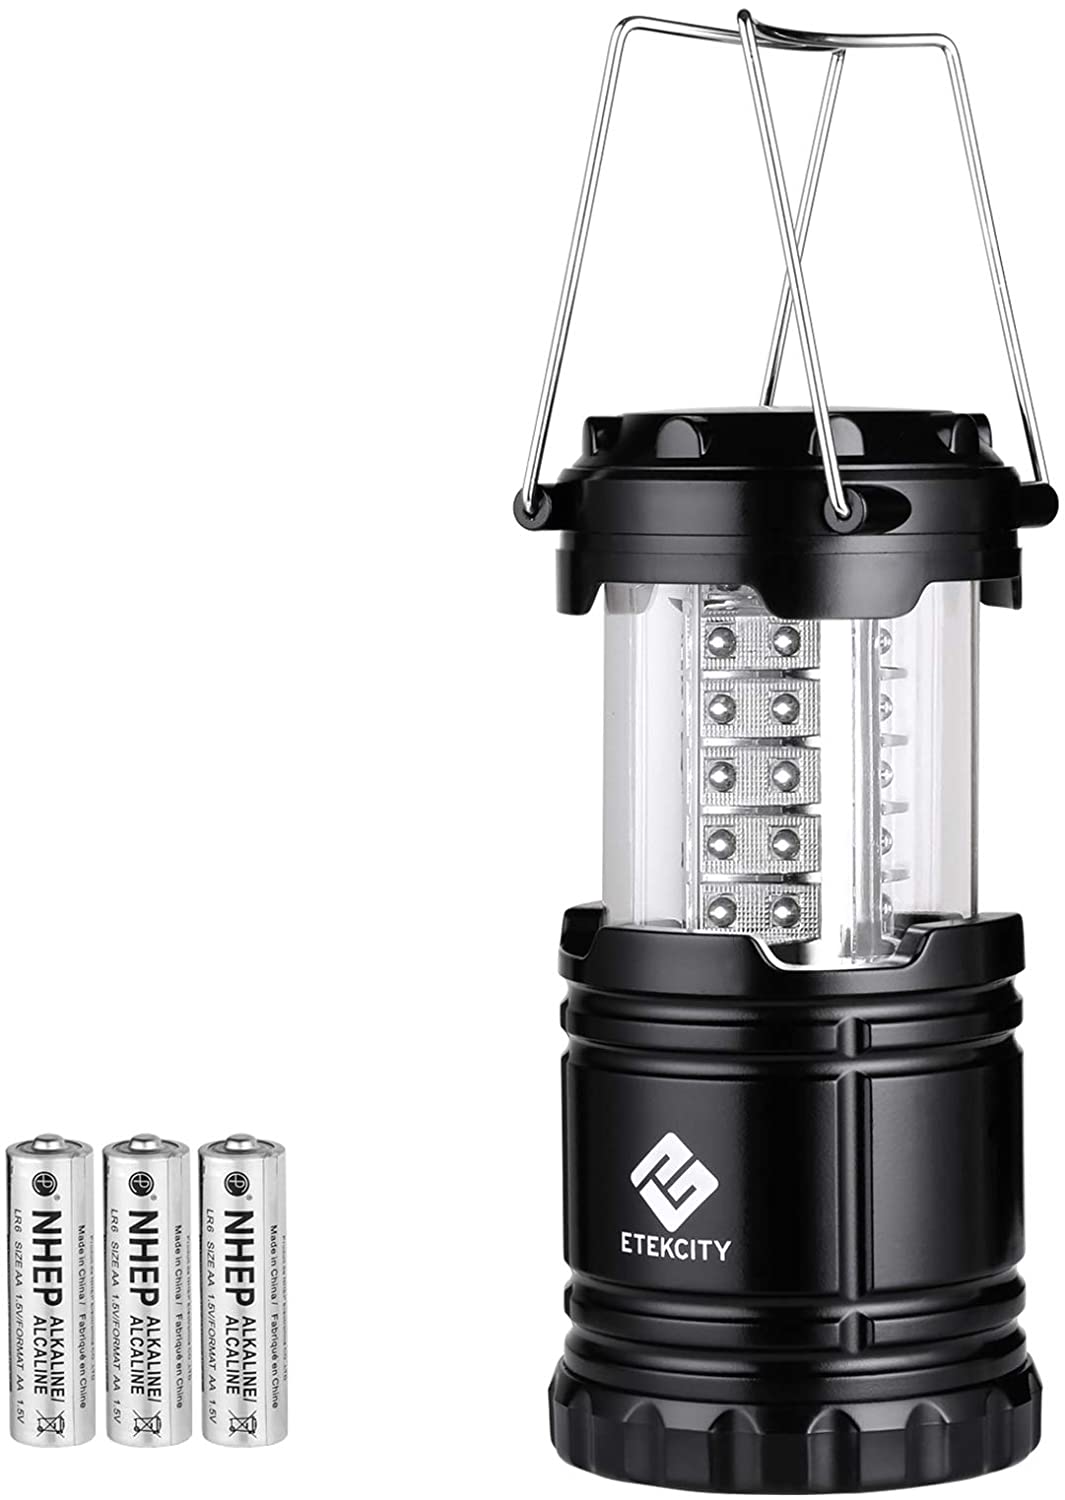 Etekcity LED Collapsible Lantern Tactical Emergency Lamps Lights NWT V